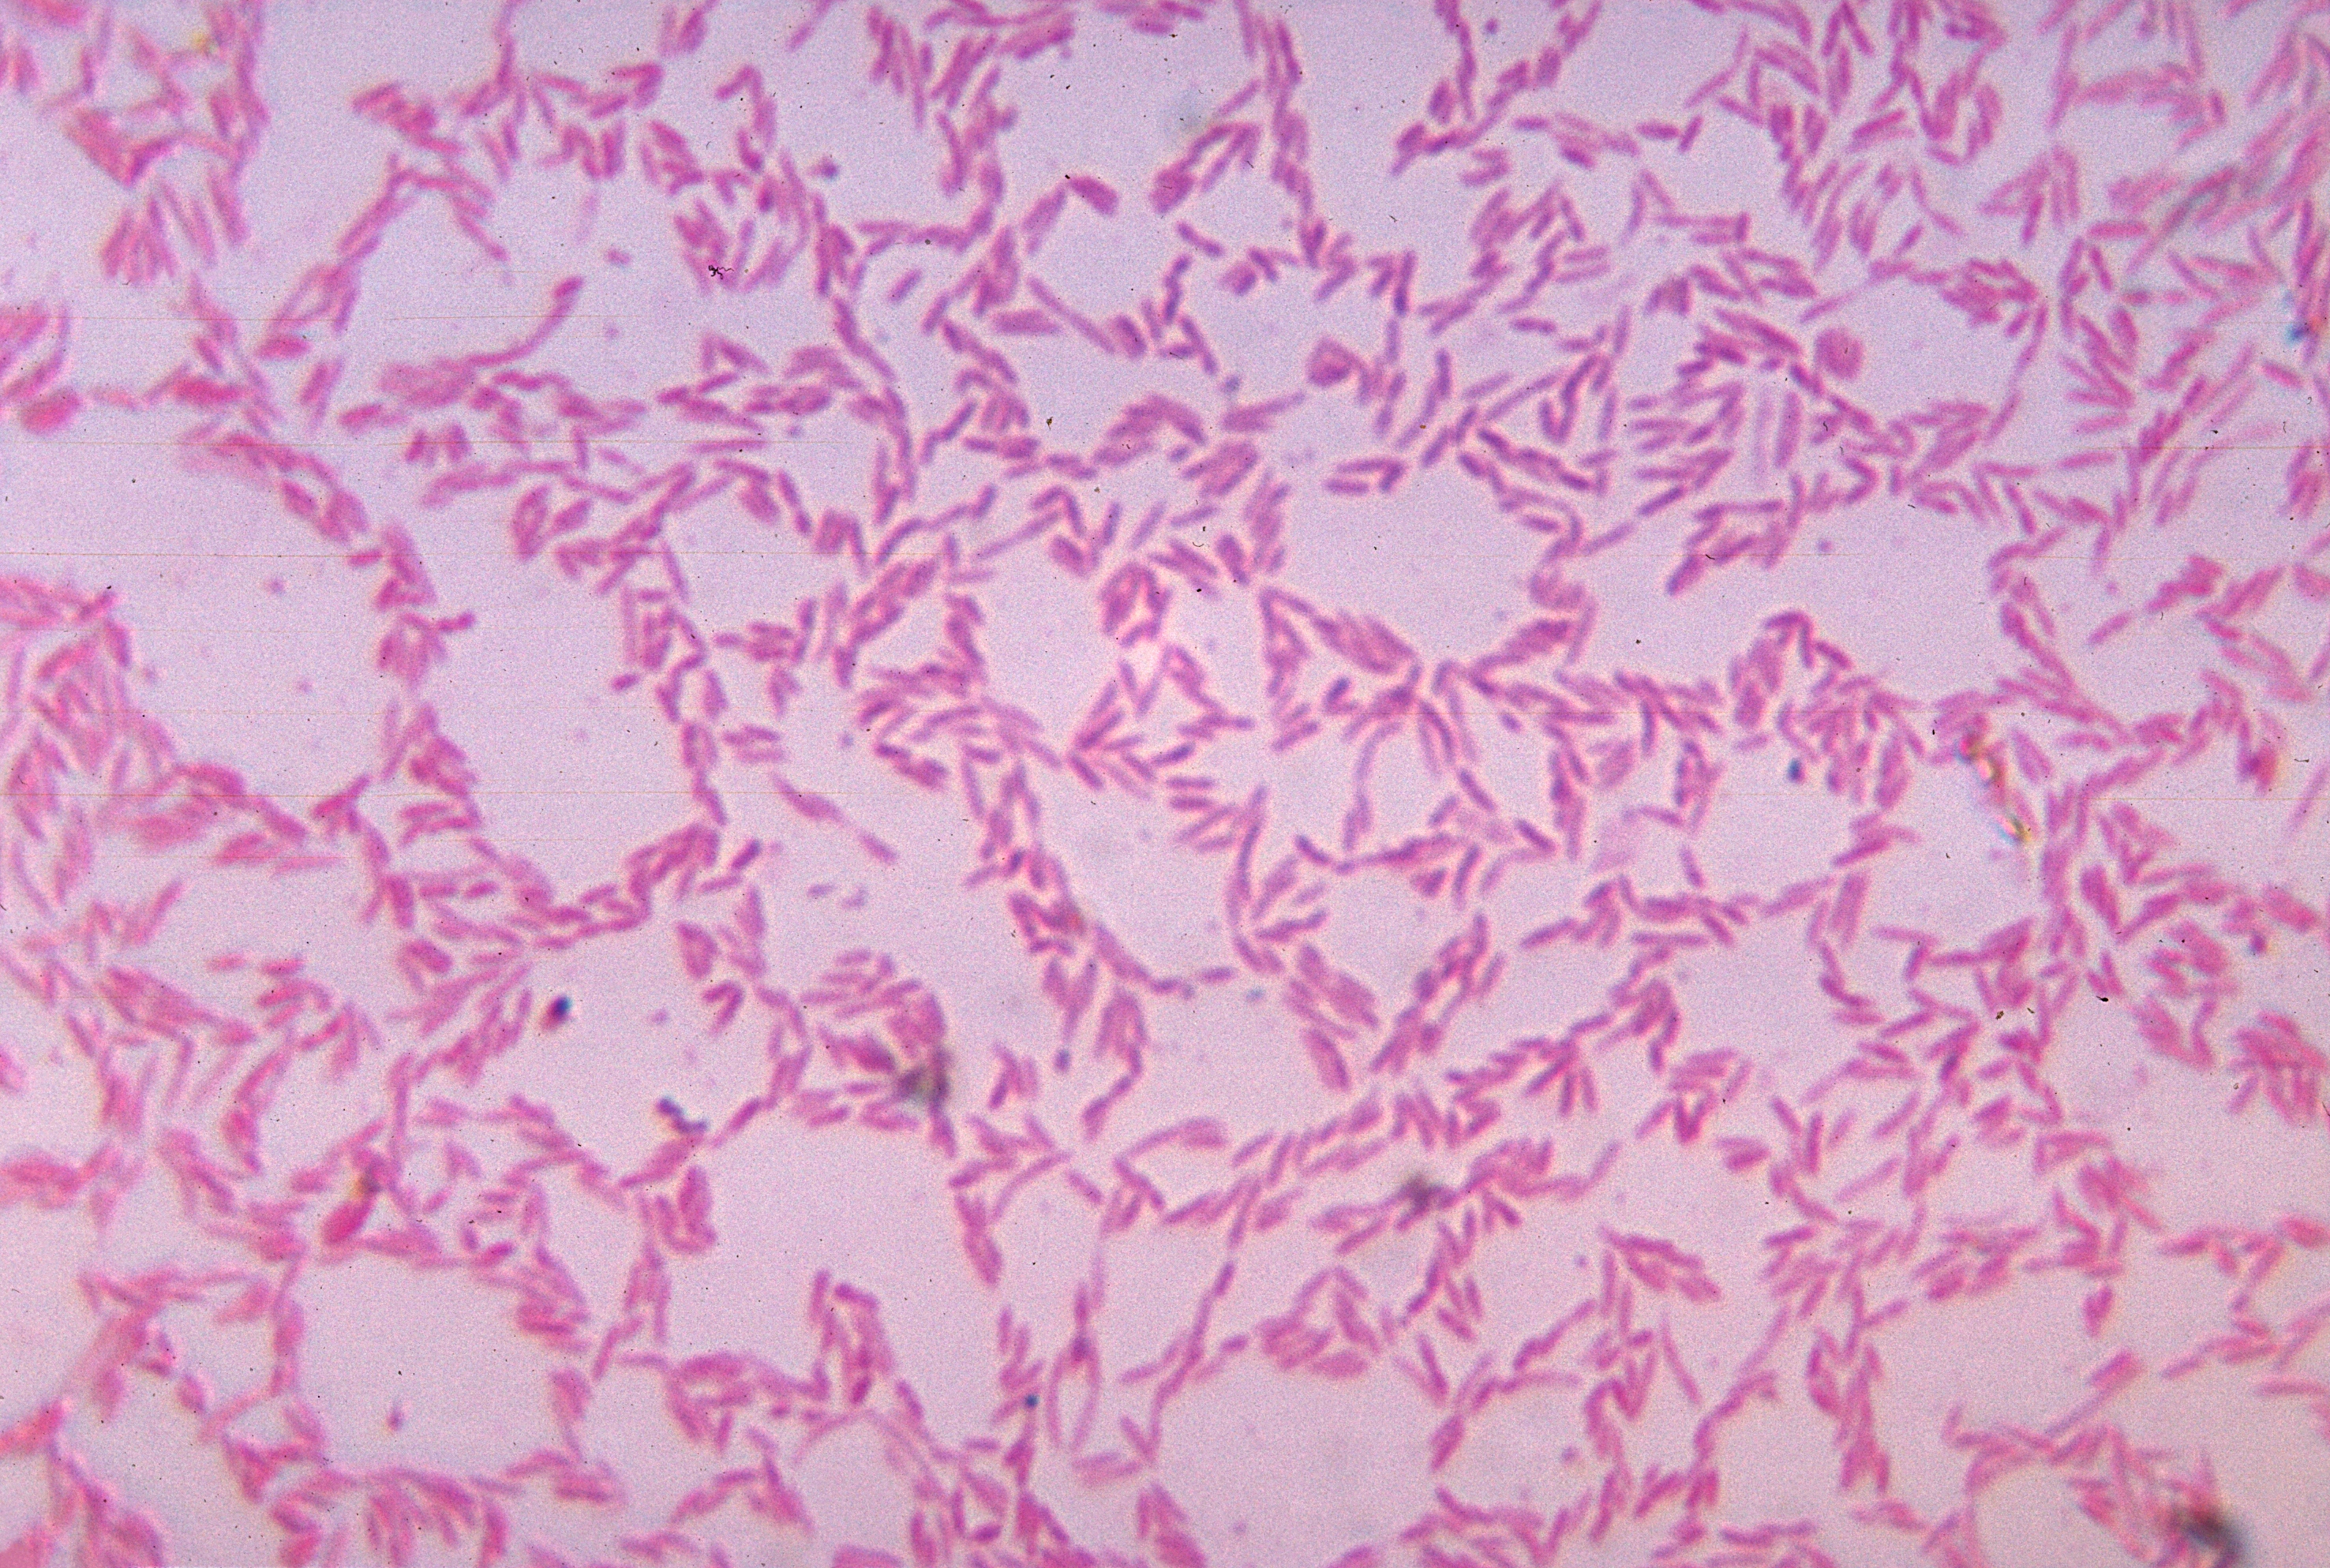 Bacteroides spp. anaerobically cultured in blood agar medium.